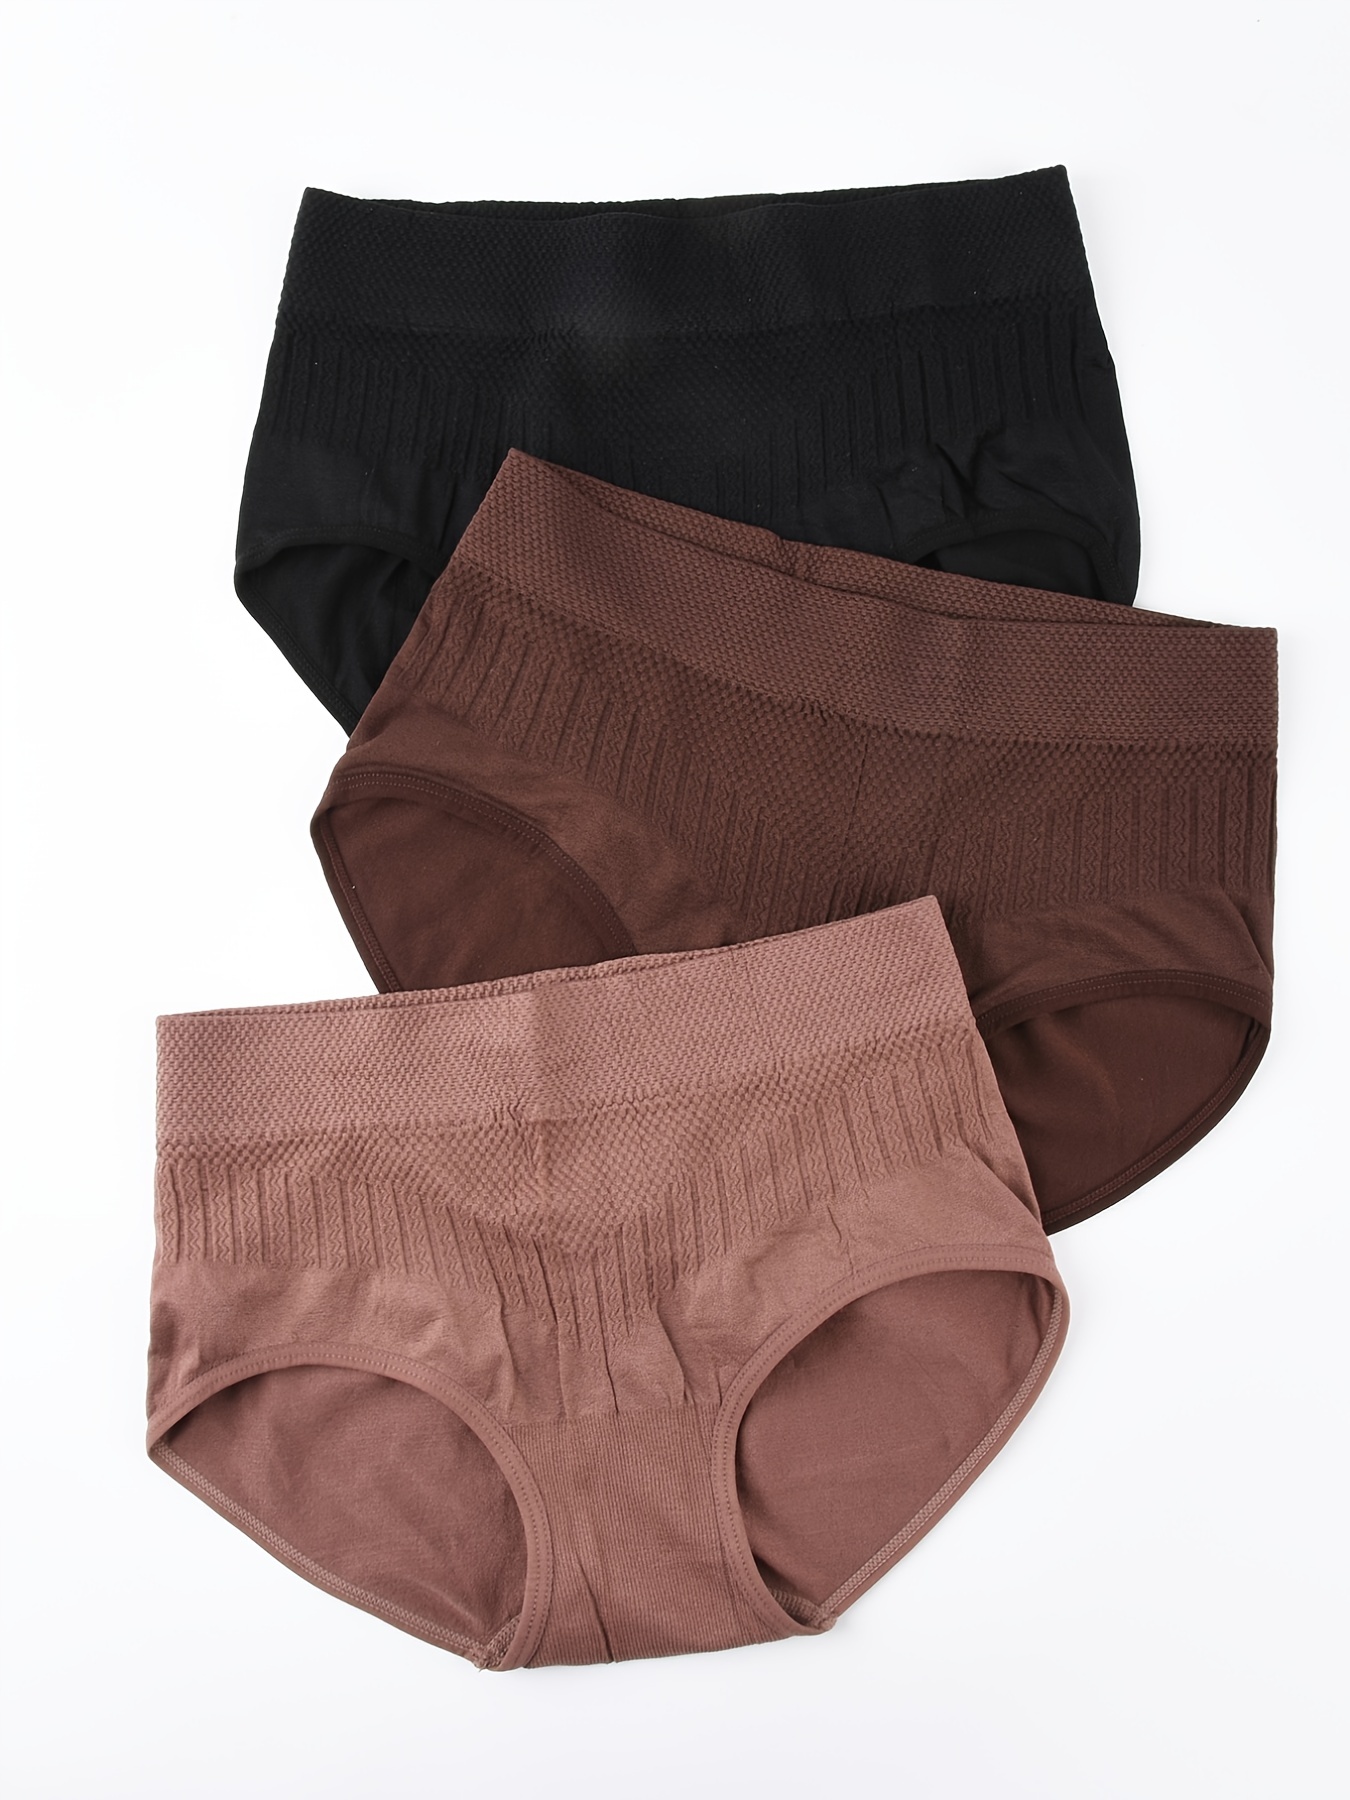 7 Colors Women's Seamless Panty Underwear Mid Waist Elastic Cotton